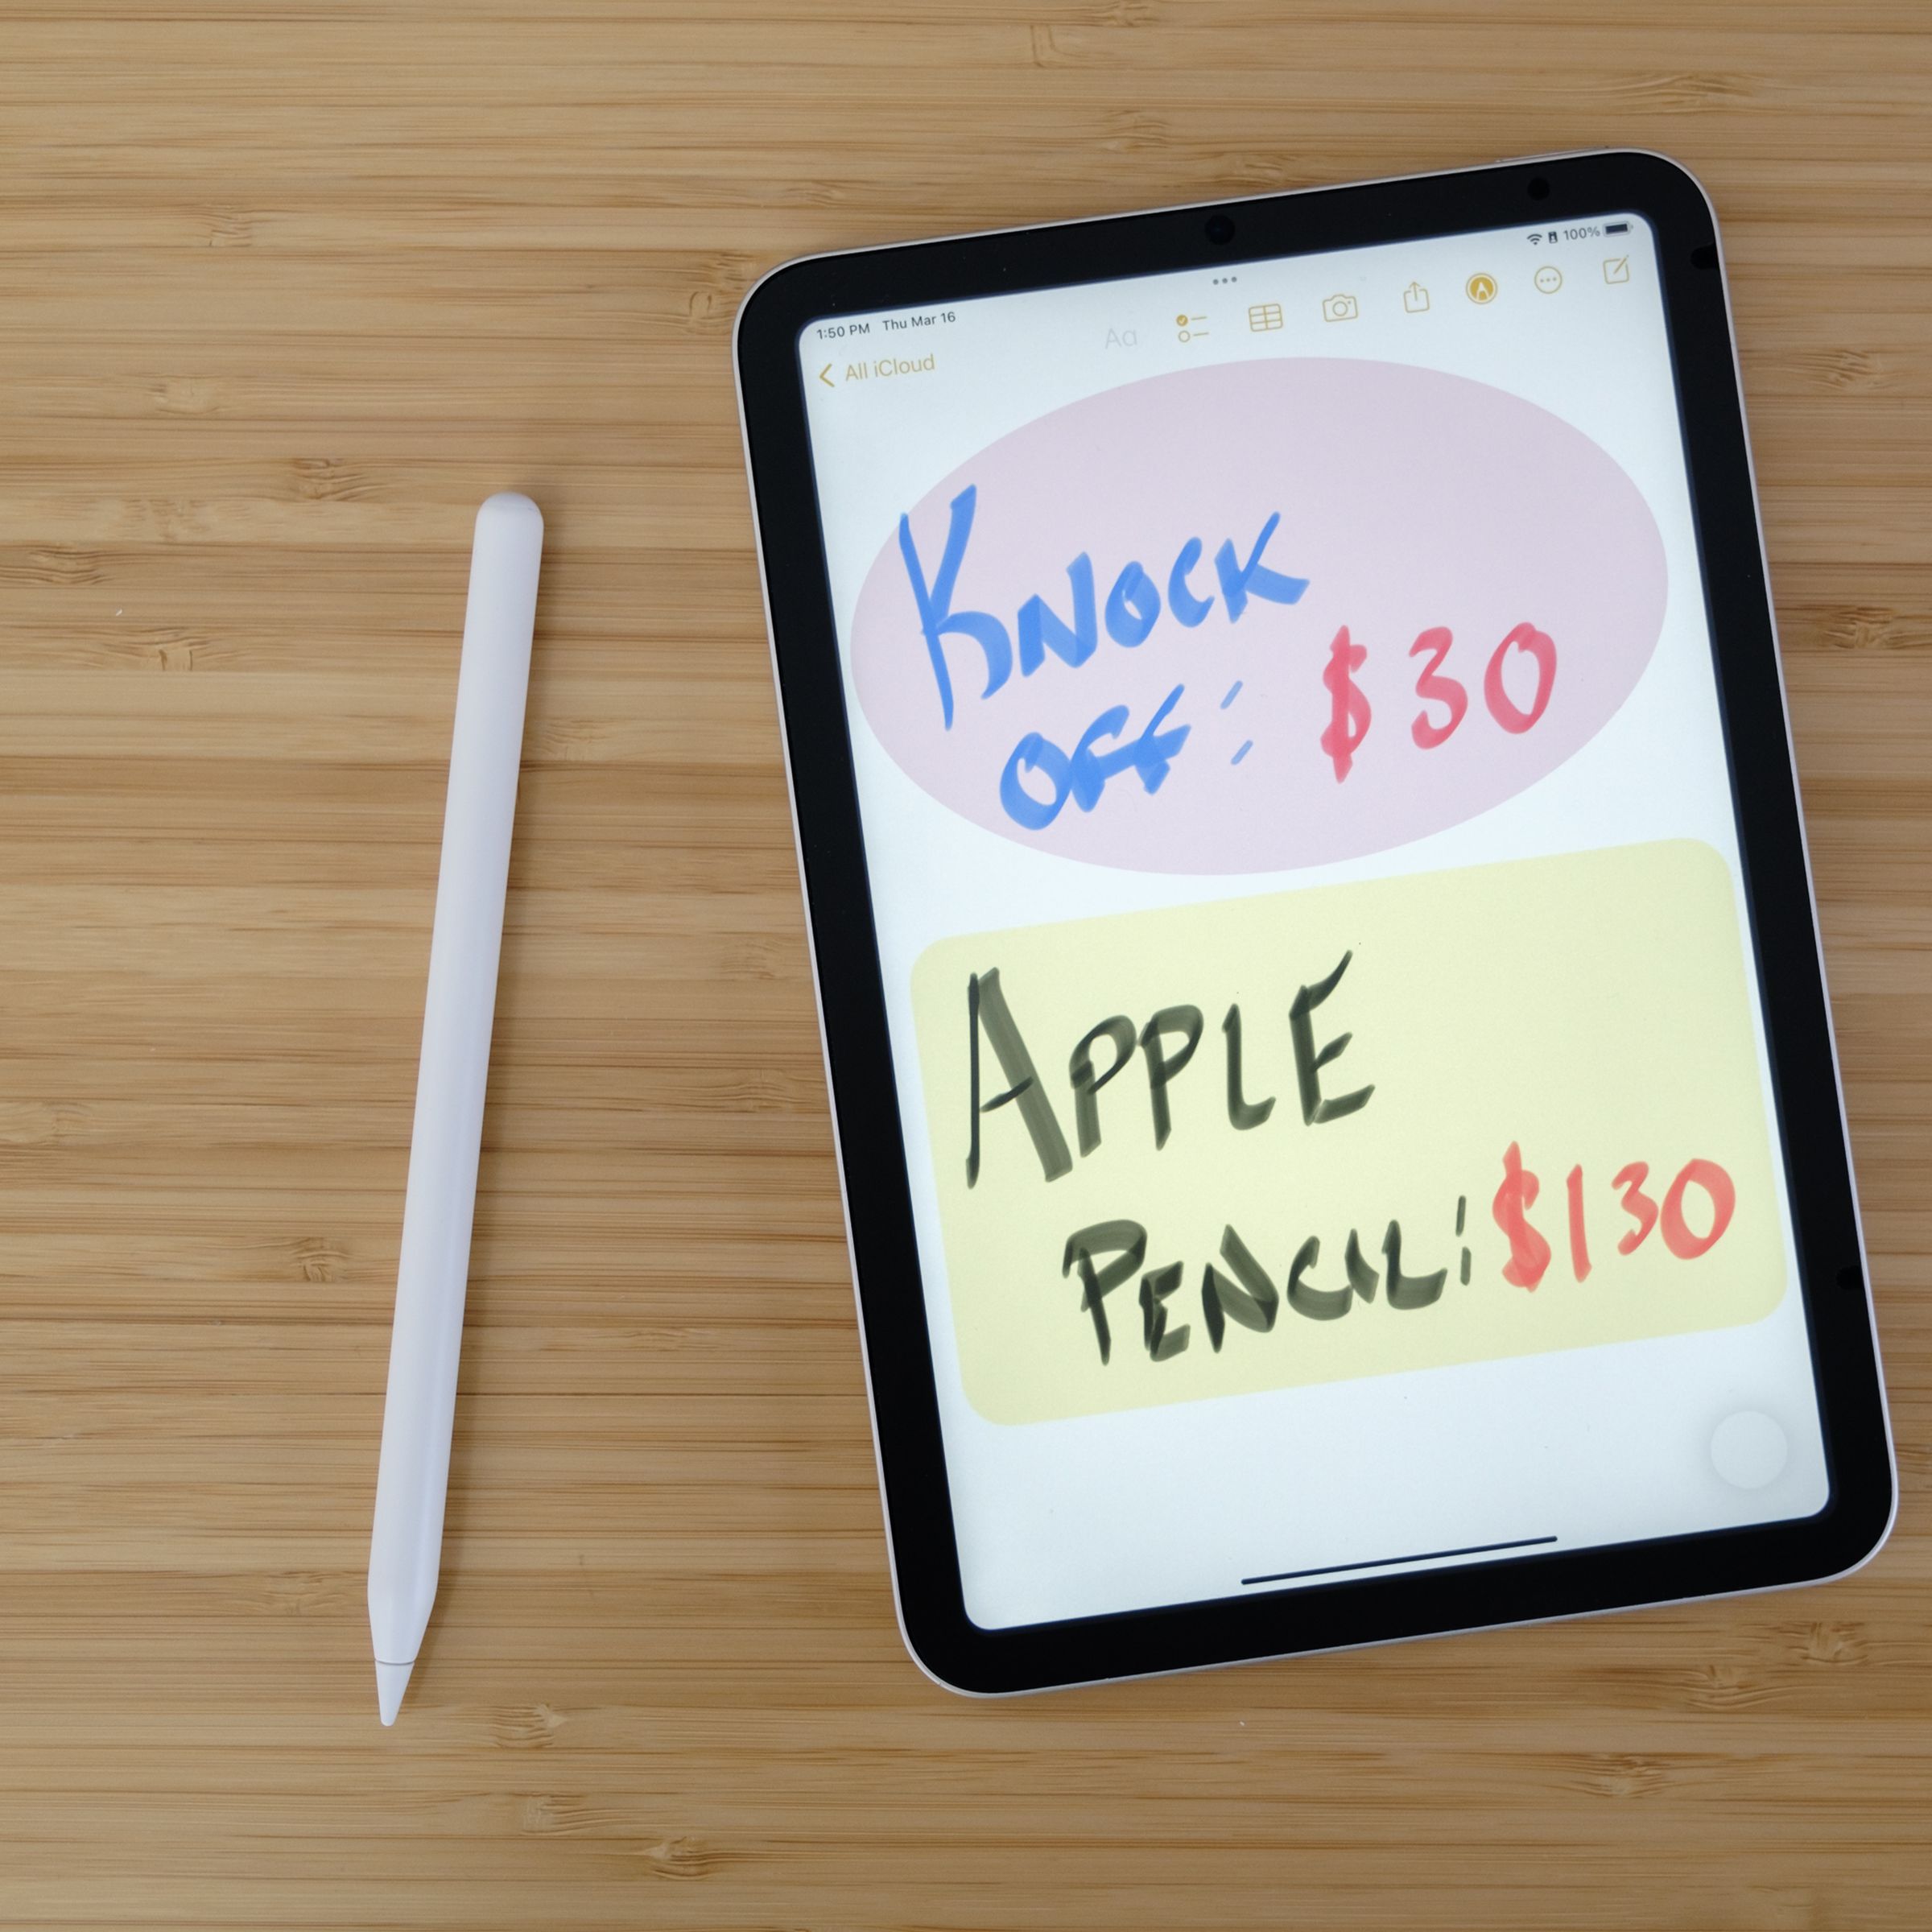 An Apple Pencil-like stylus next to an iPad Mini displaying artwork saying Knockoff: $30 Apple Pencil: $130